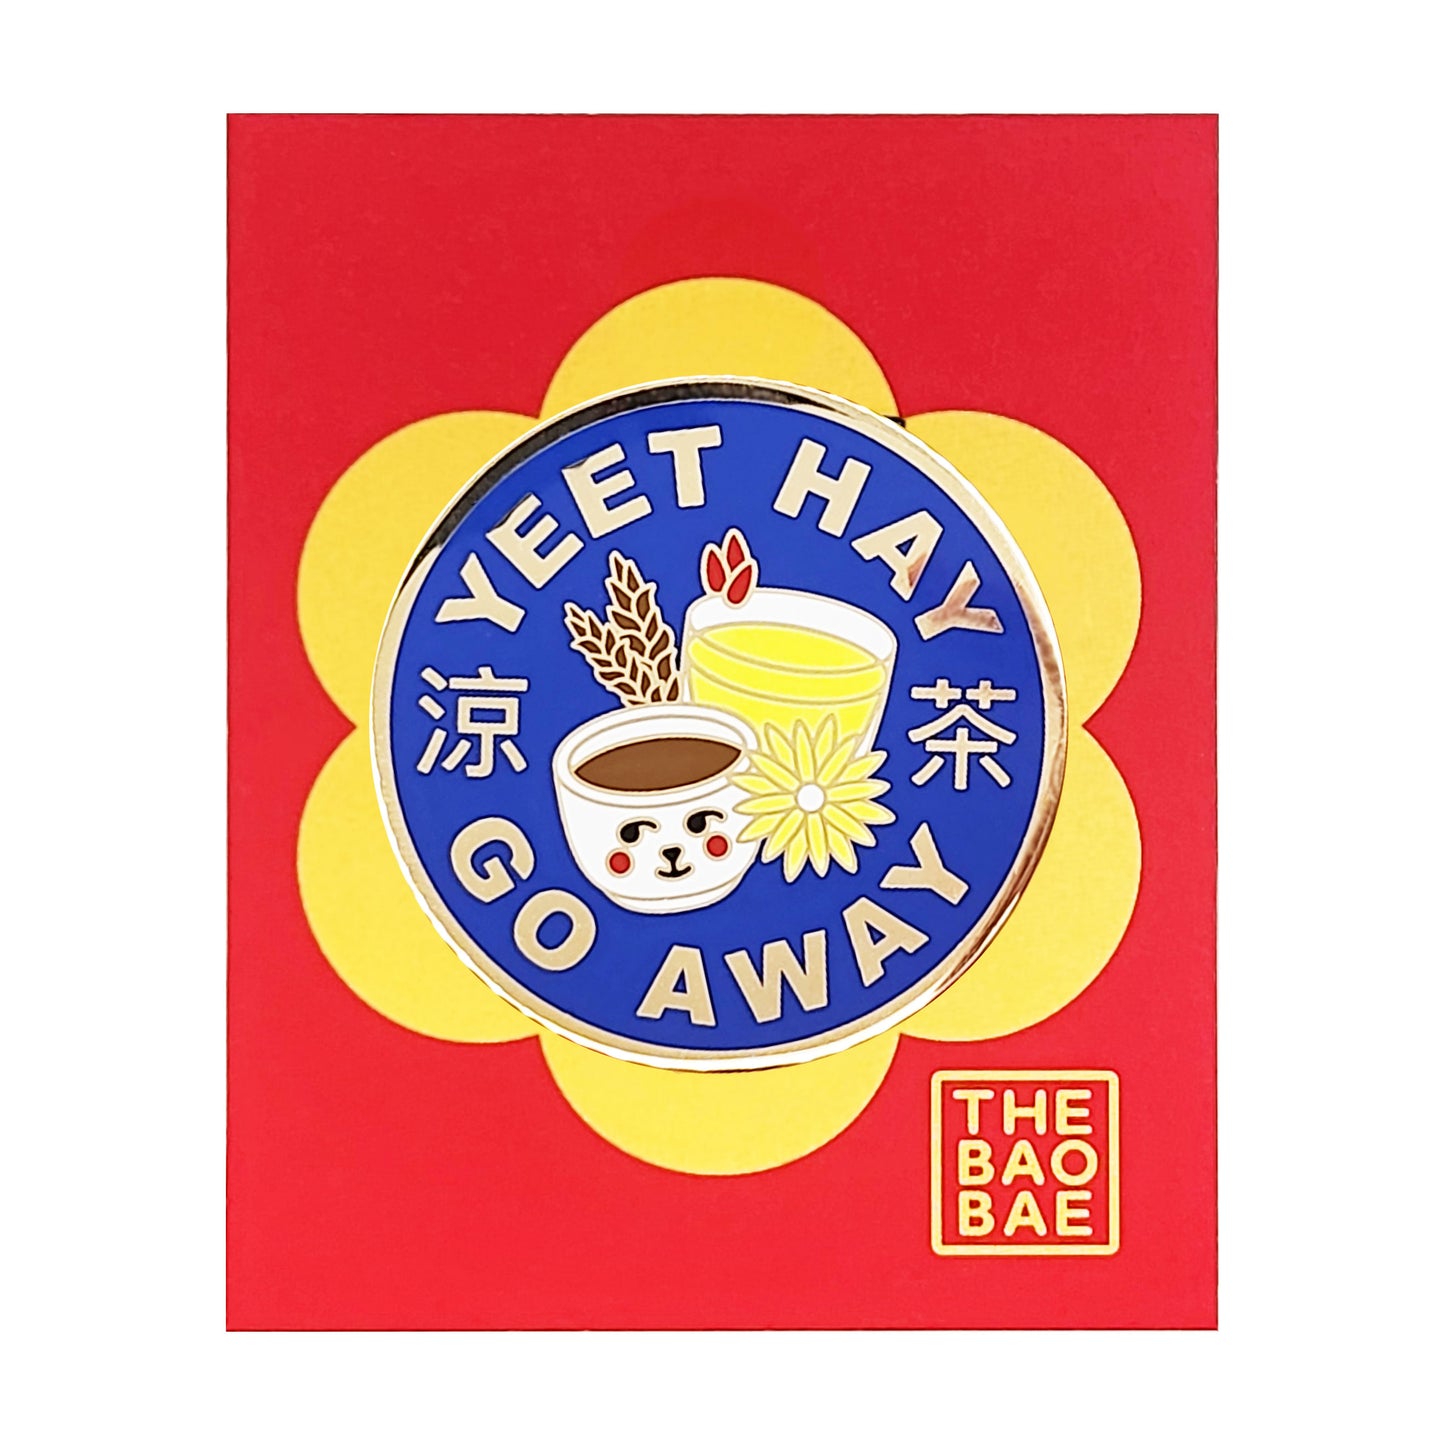 Yeet Hay Go Away Enamel Pin 熱氣 (火气大 Huo Qi Da)